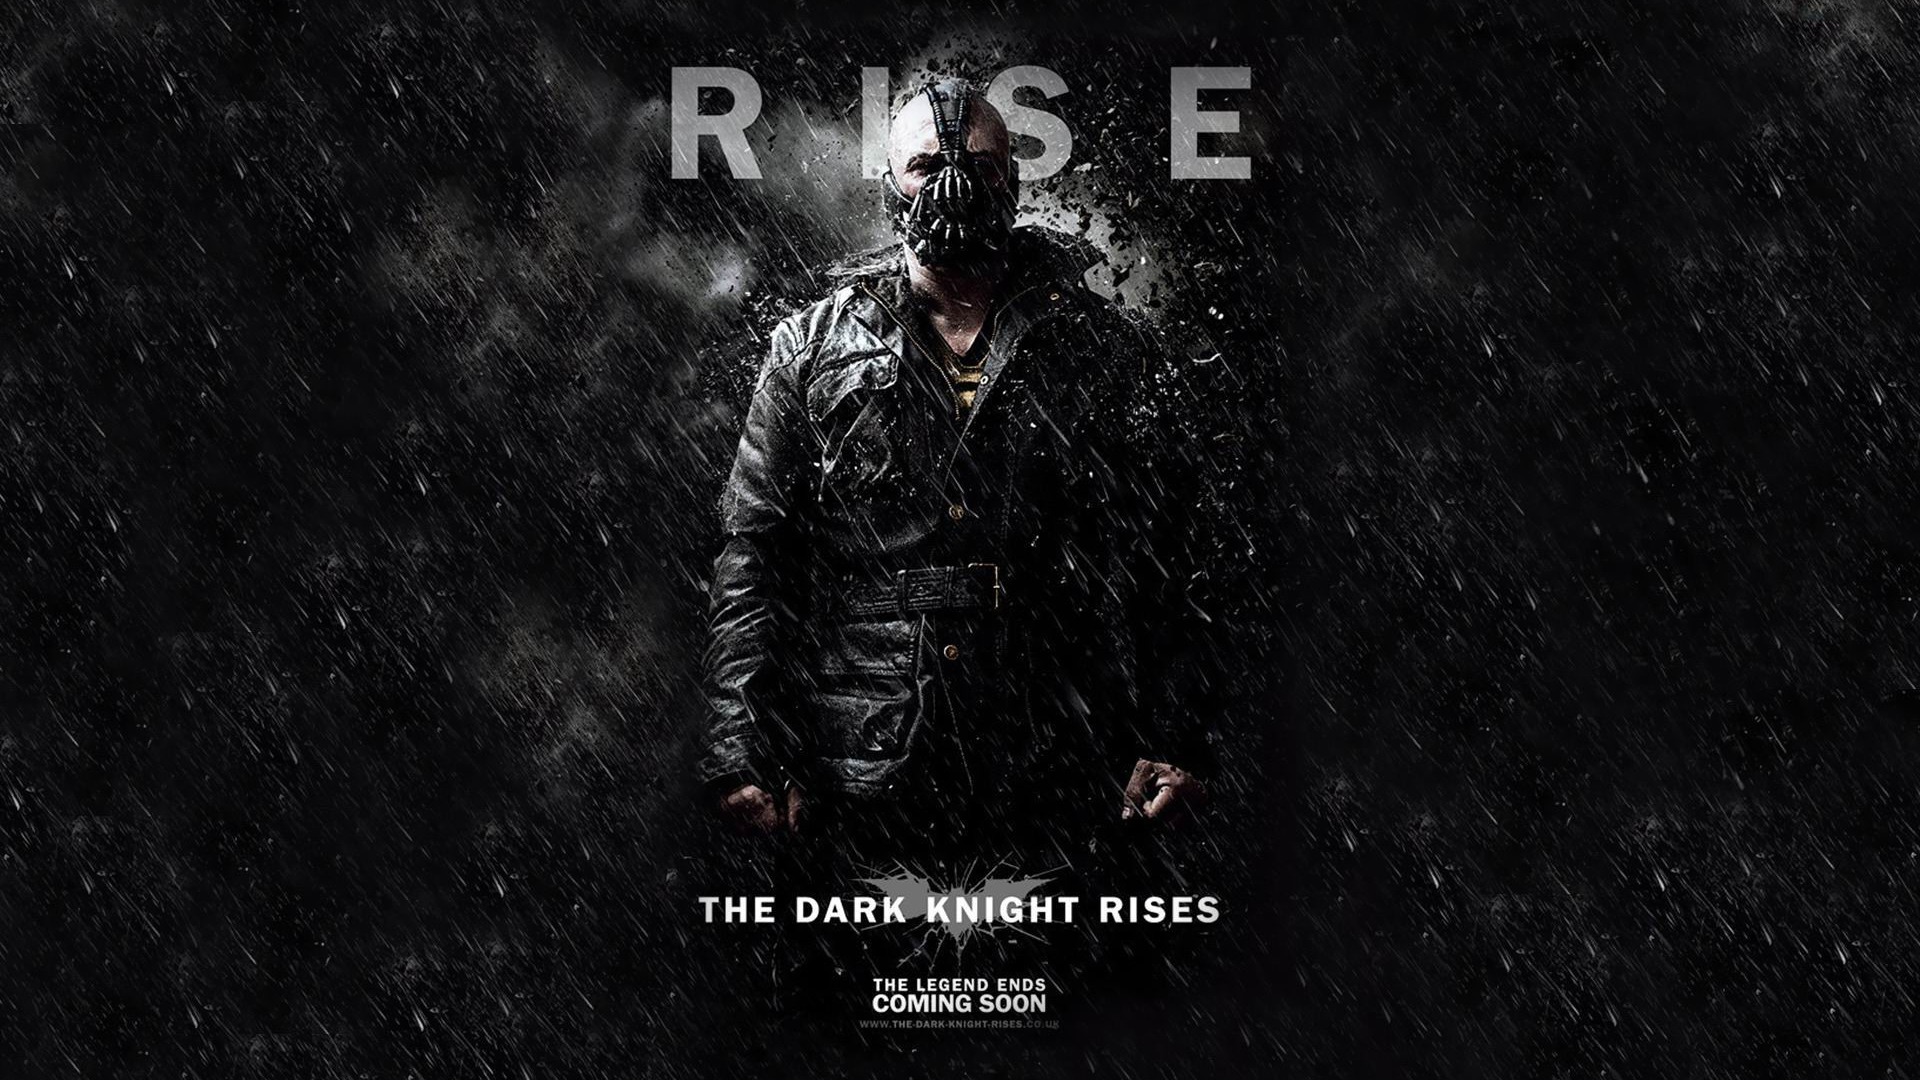 The Dark Knight Rises Bane HD Wallpaper Download HD Wallpapers